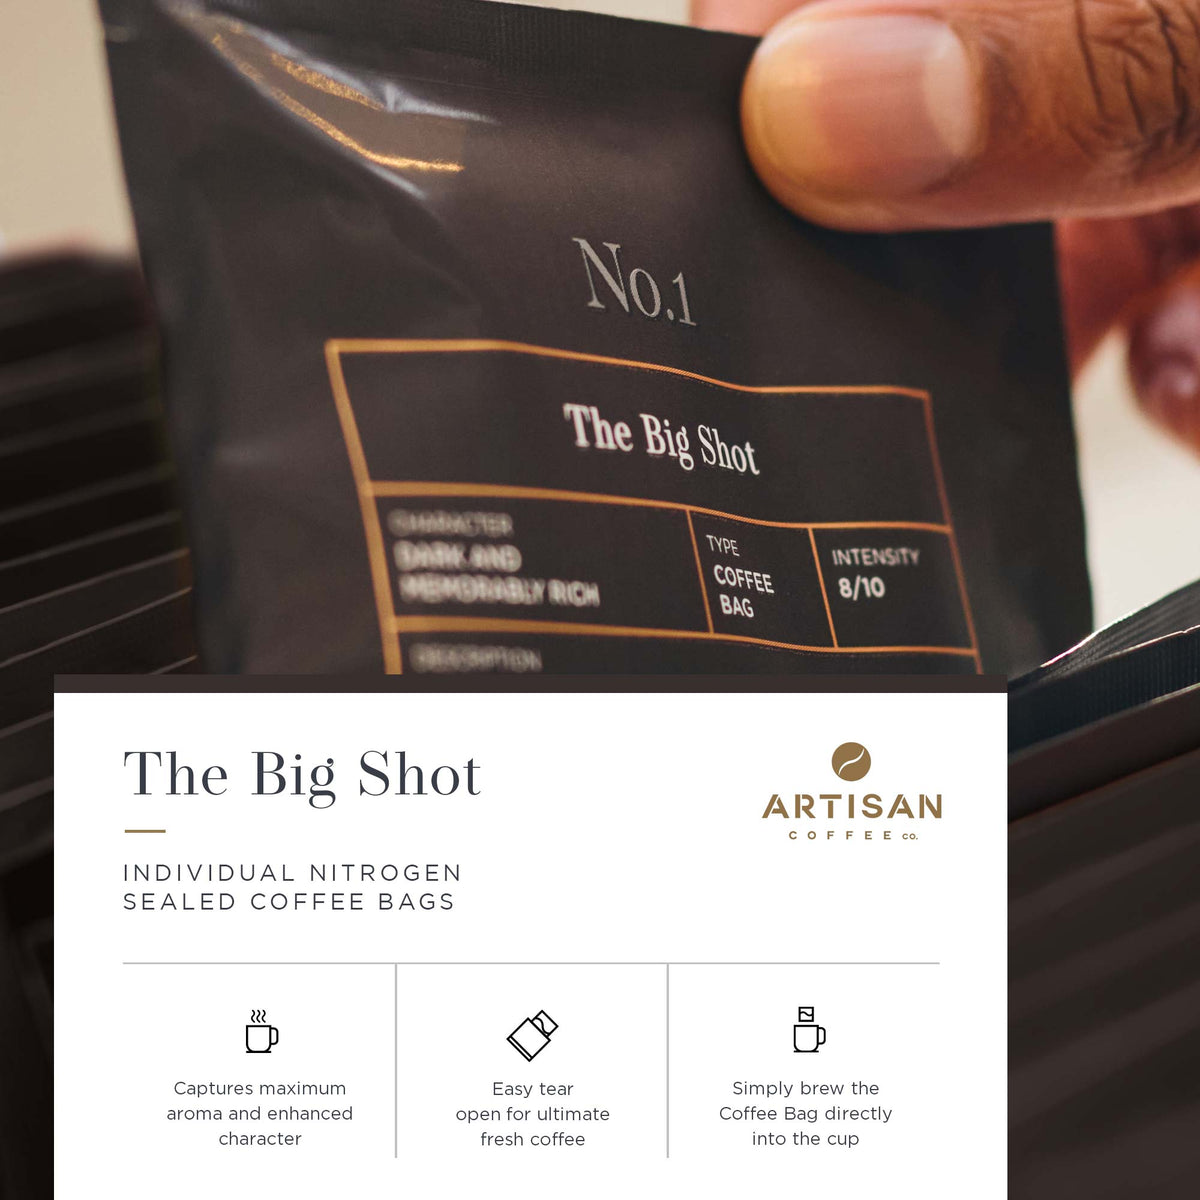 Artisan Coffee Co The Big Shot coffee bag infographic